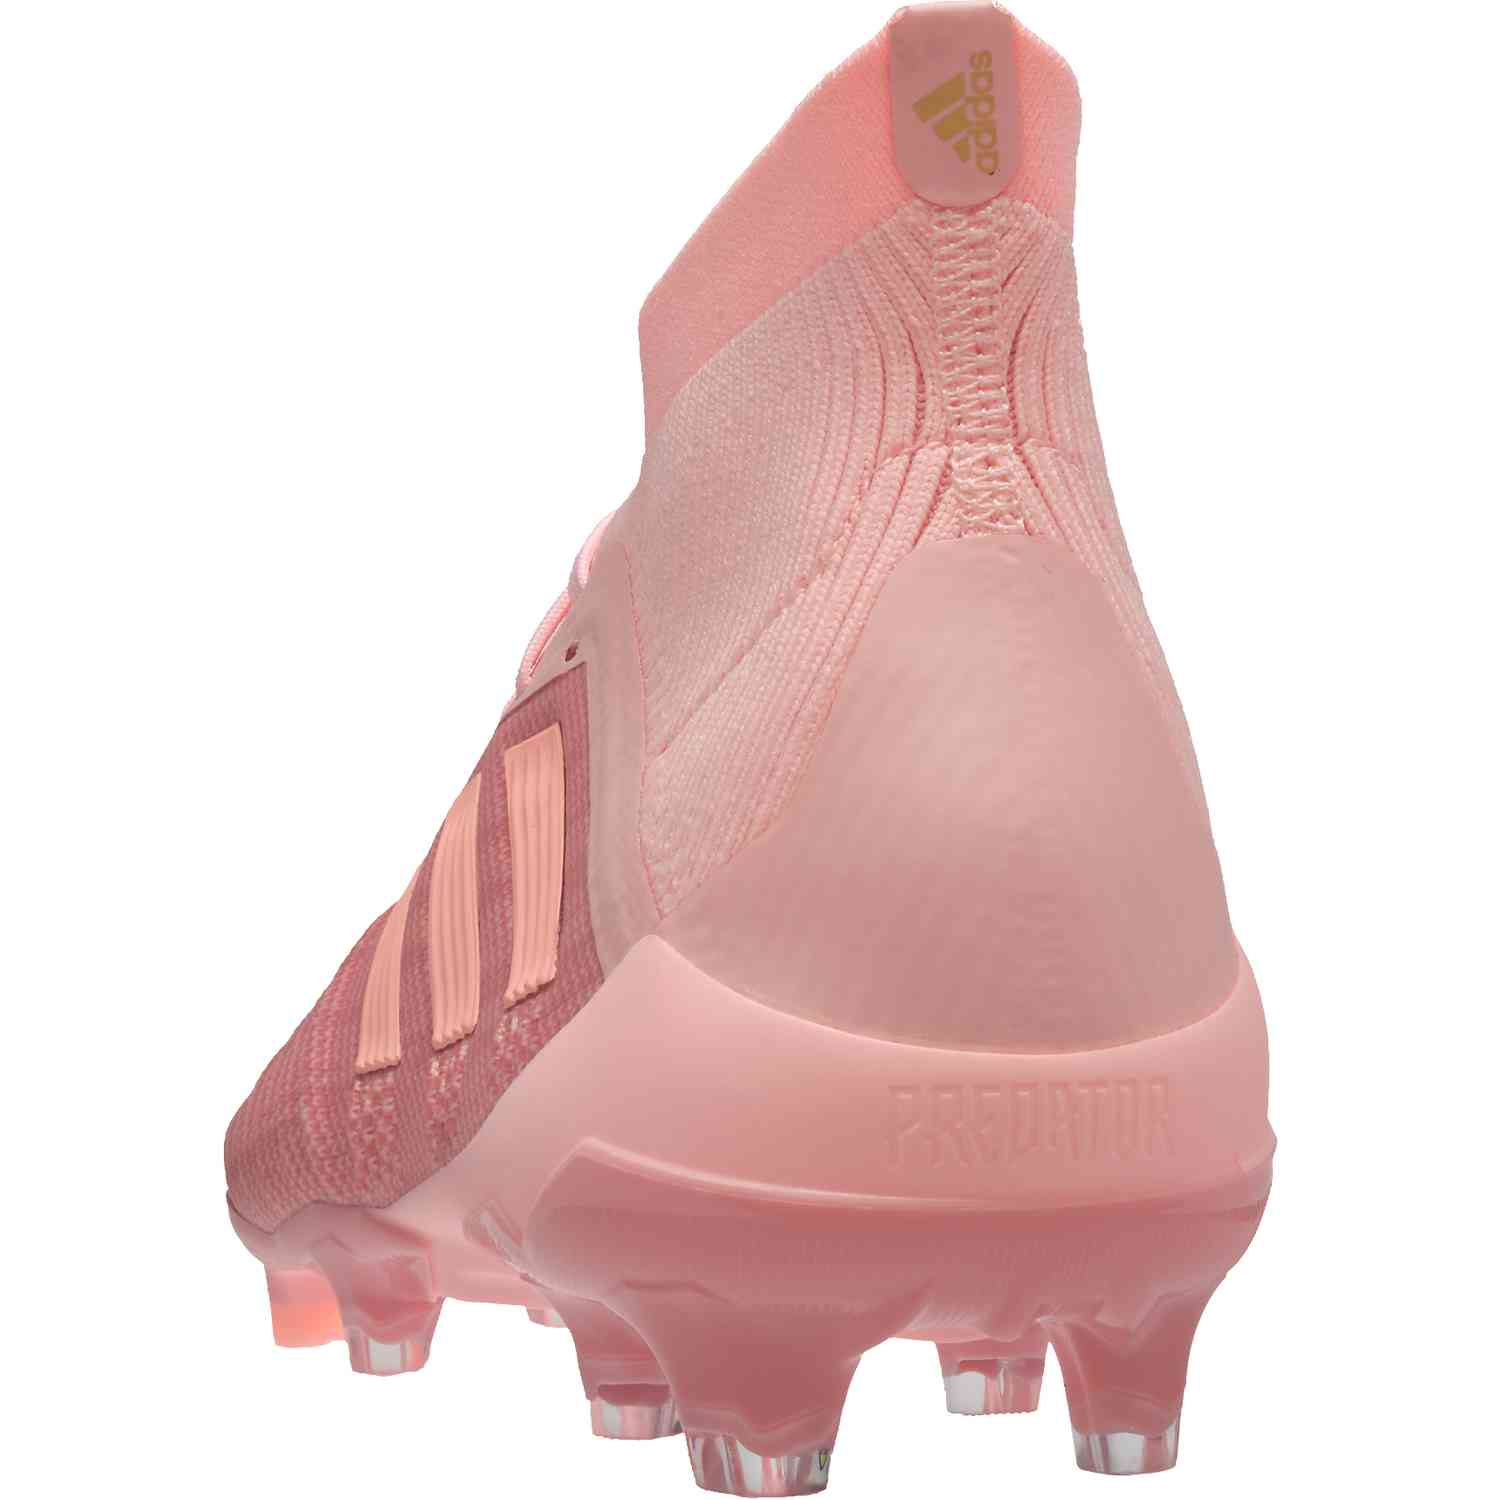 adidas predator 18.1 fg pink